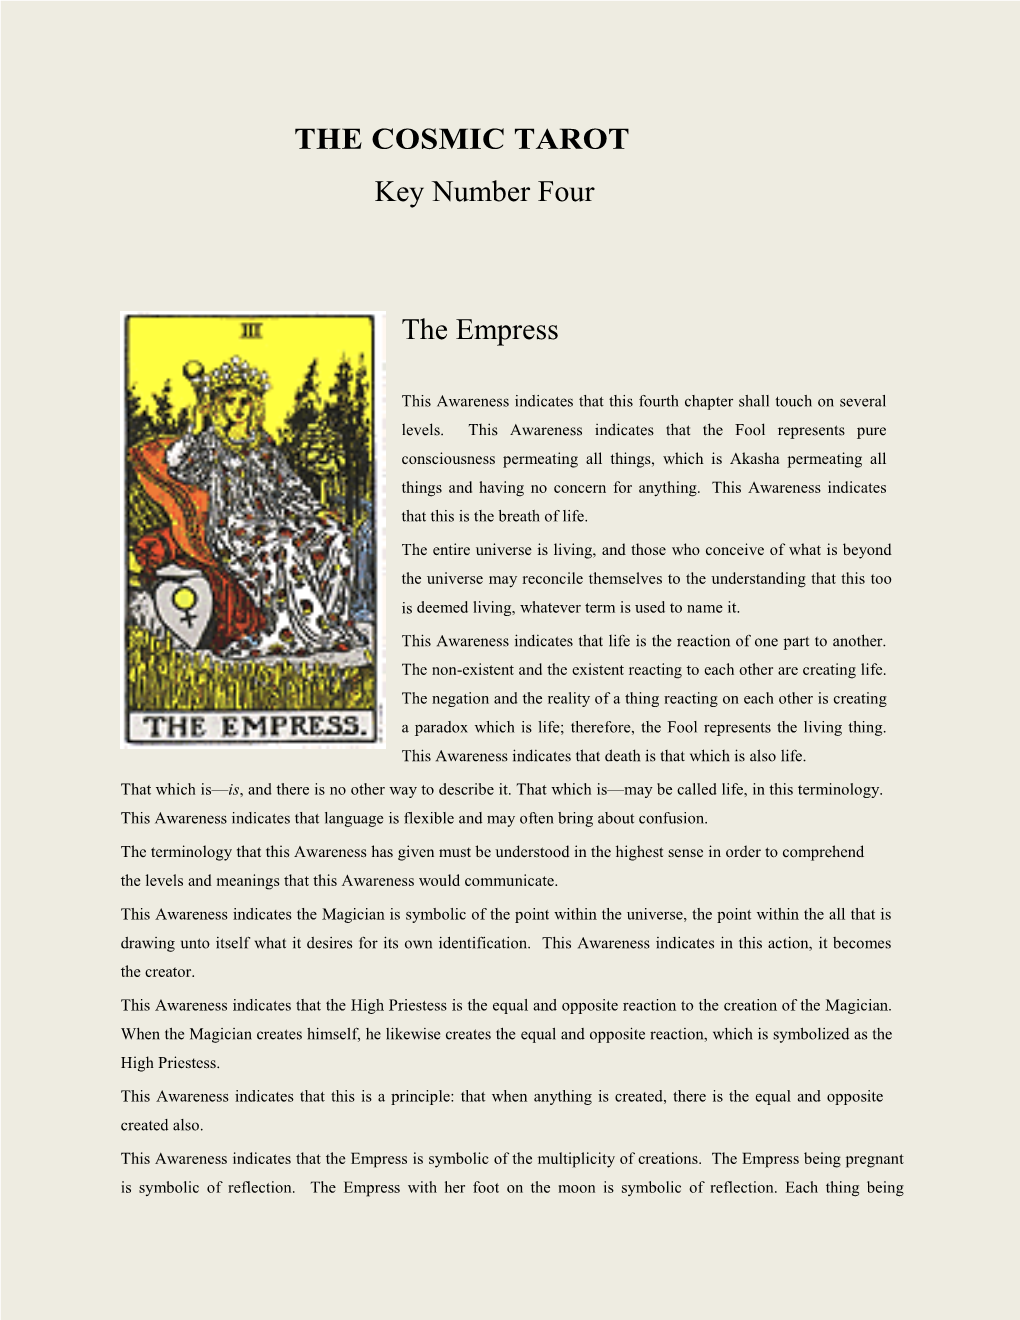 THE COSMIC TAROT Key Number Four the Empress